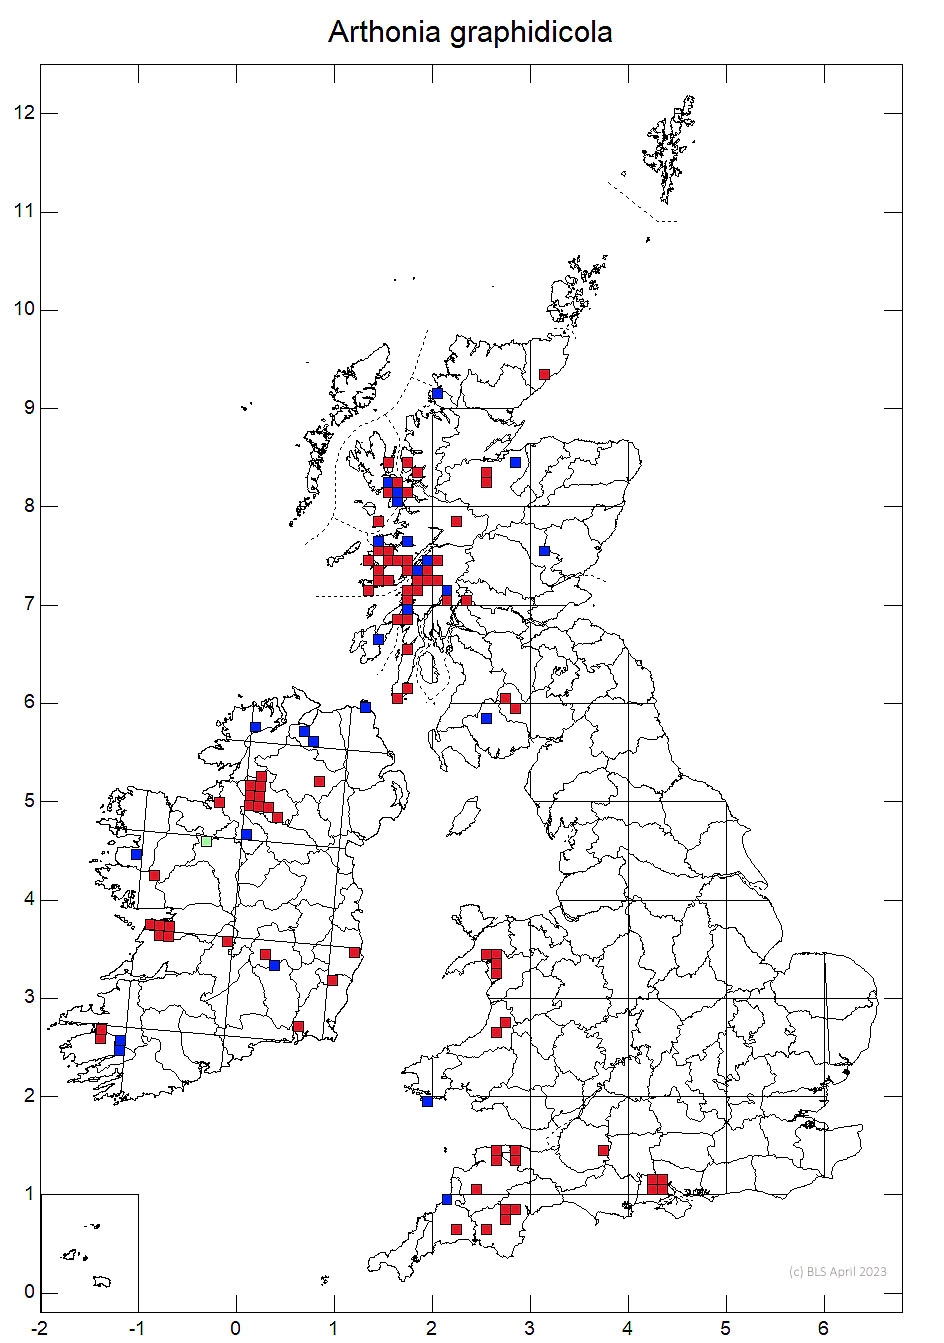 Arthonia graphidicola 10km sq distribution map